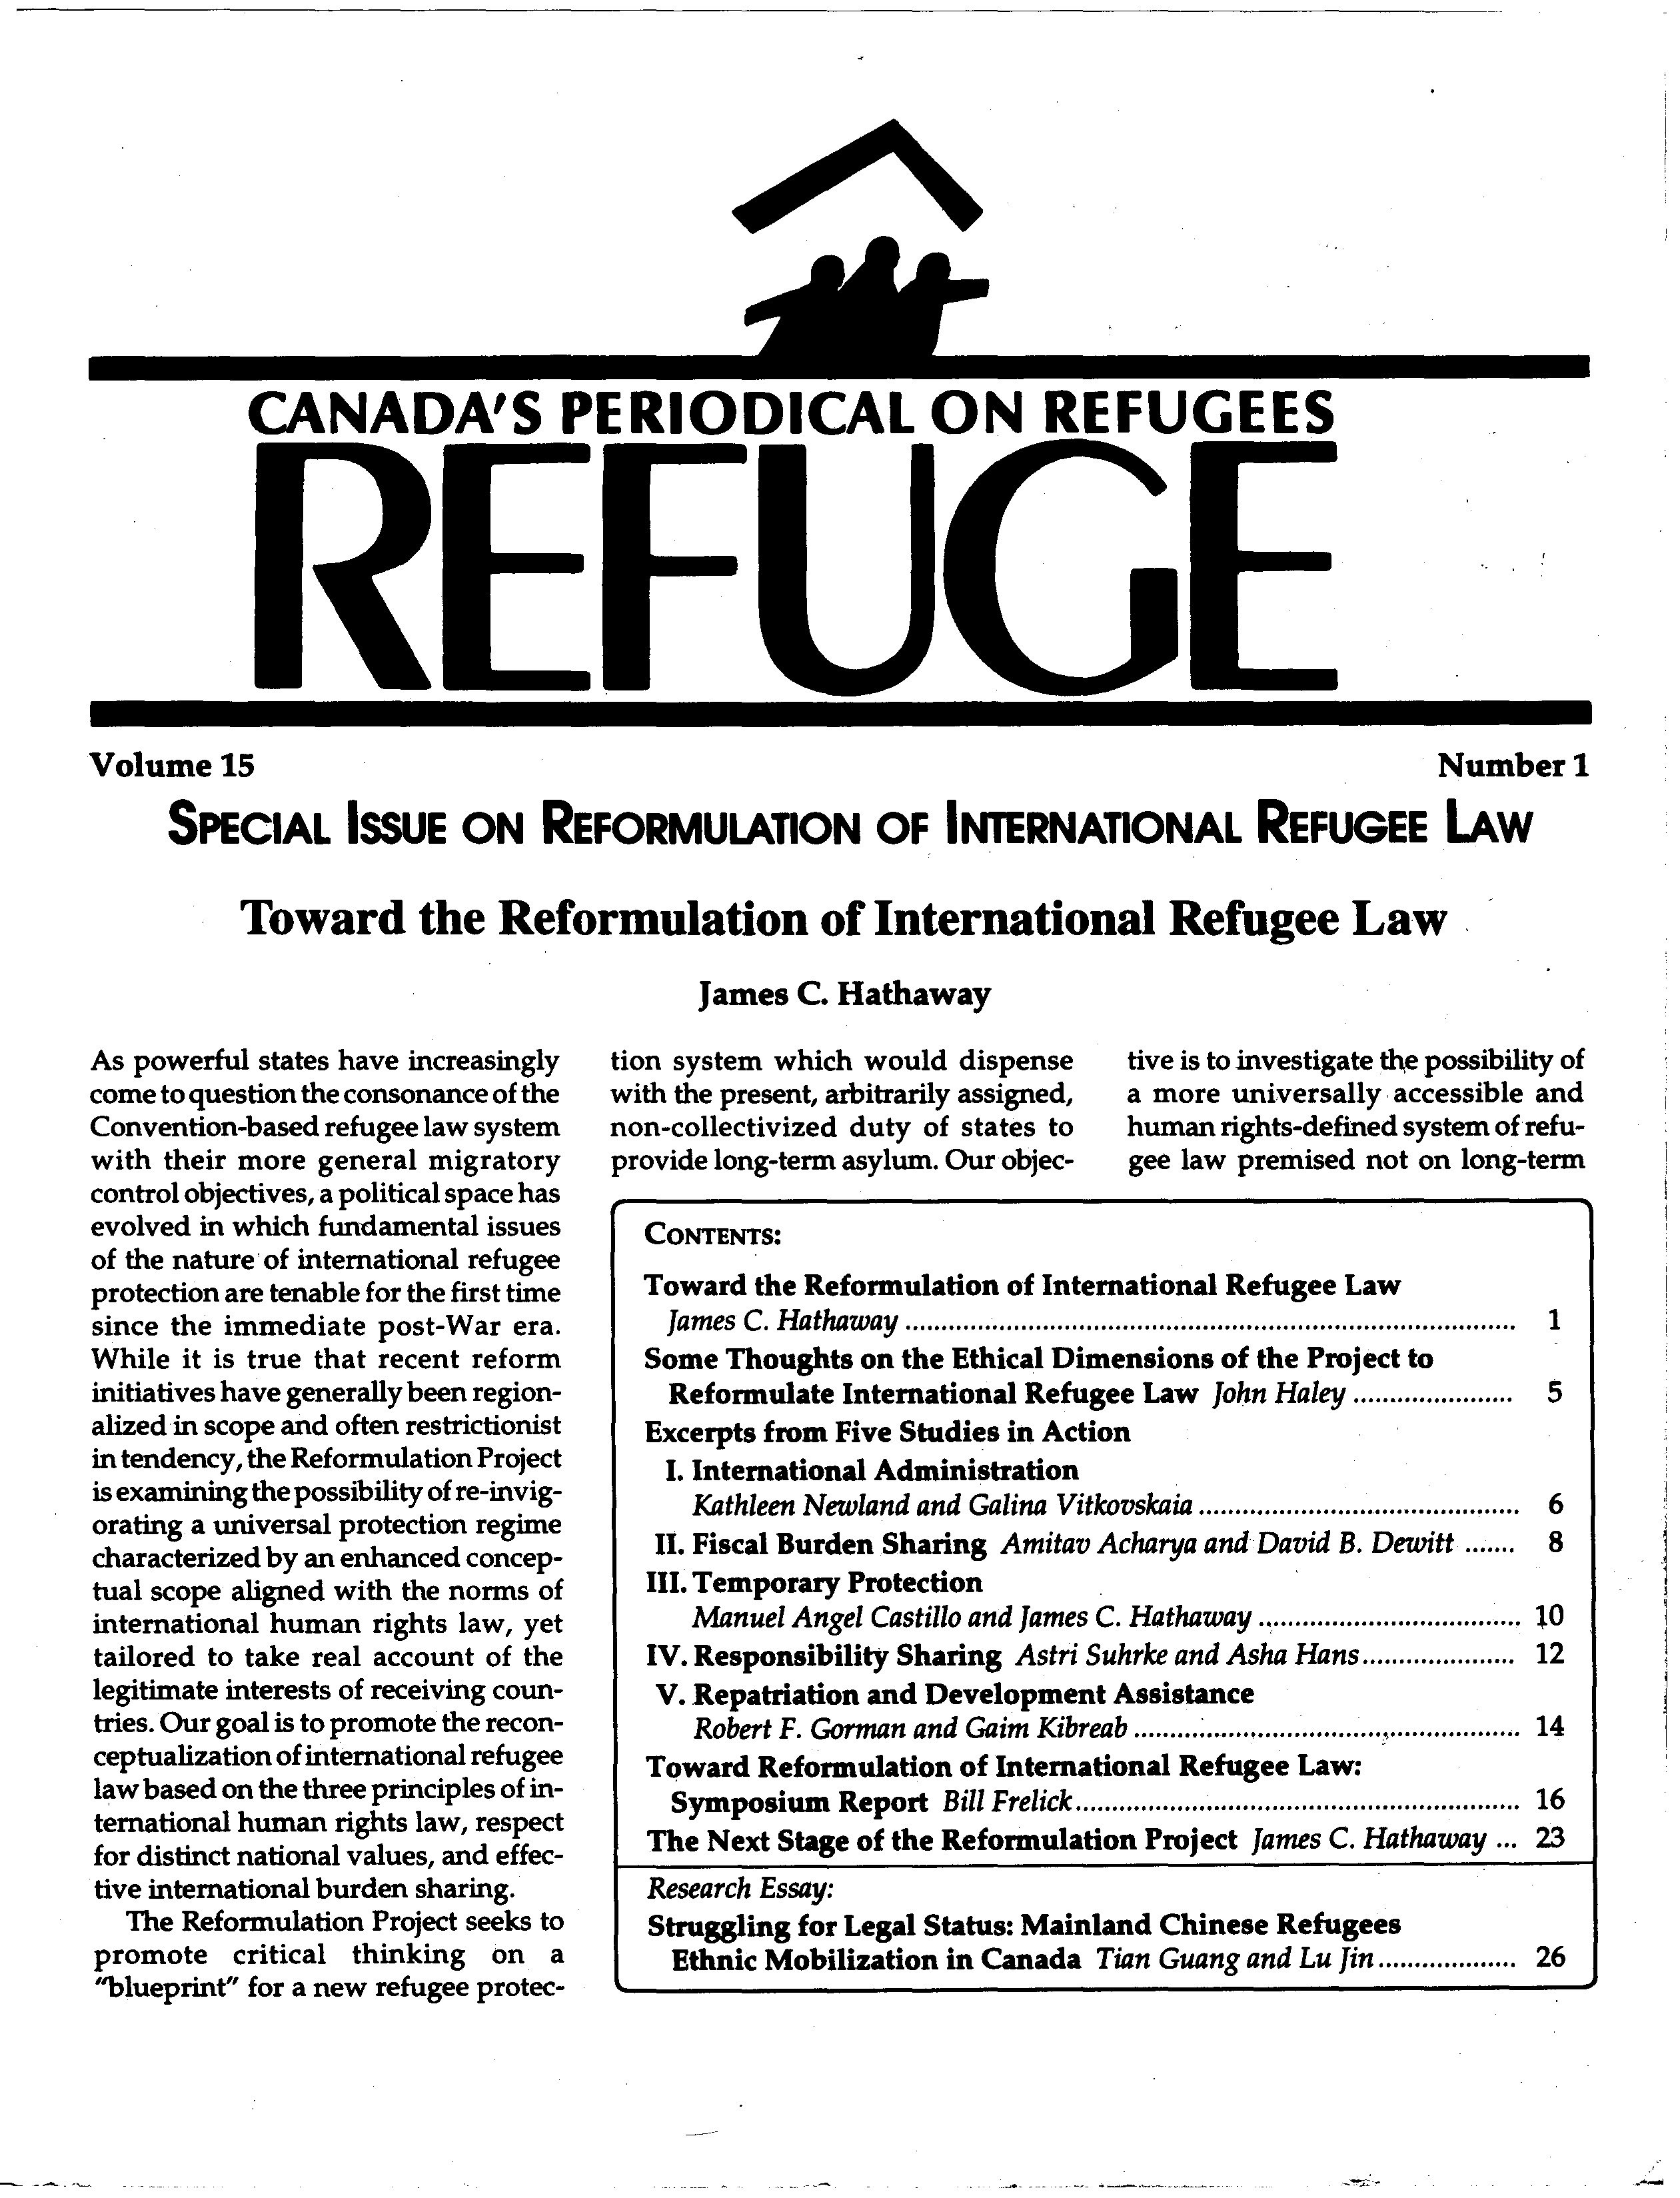 first page Refuge vol. 15.1 1996